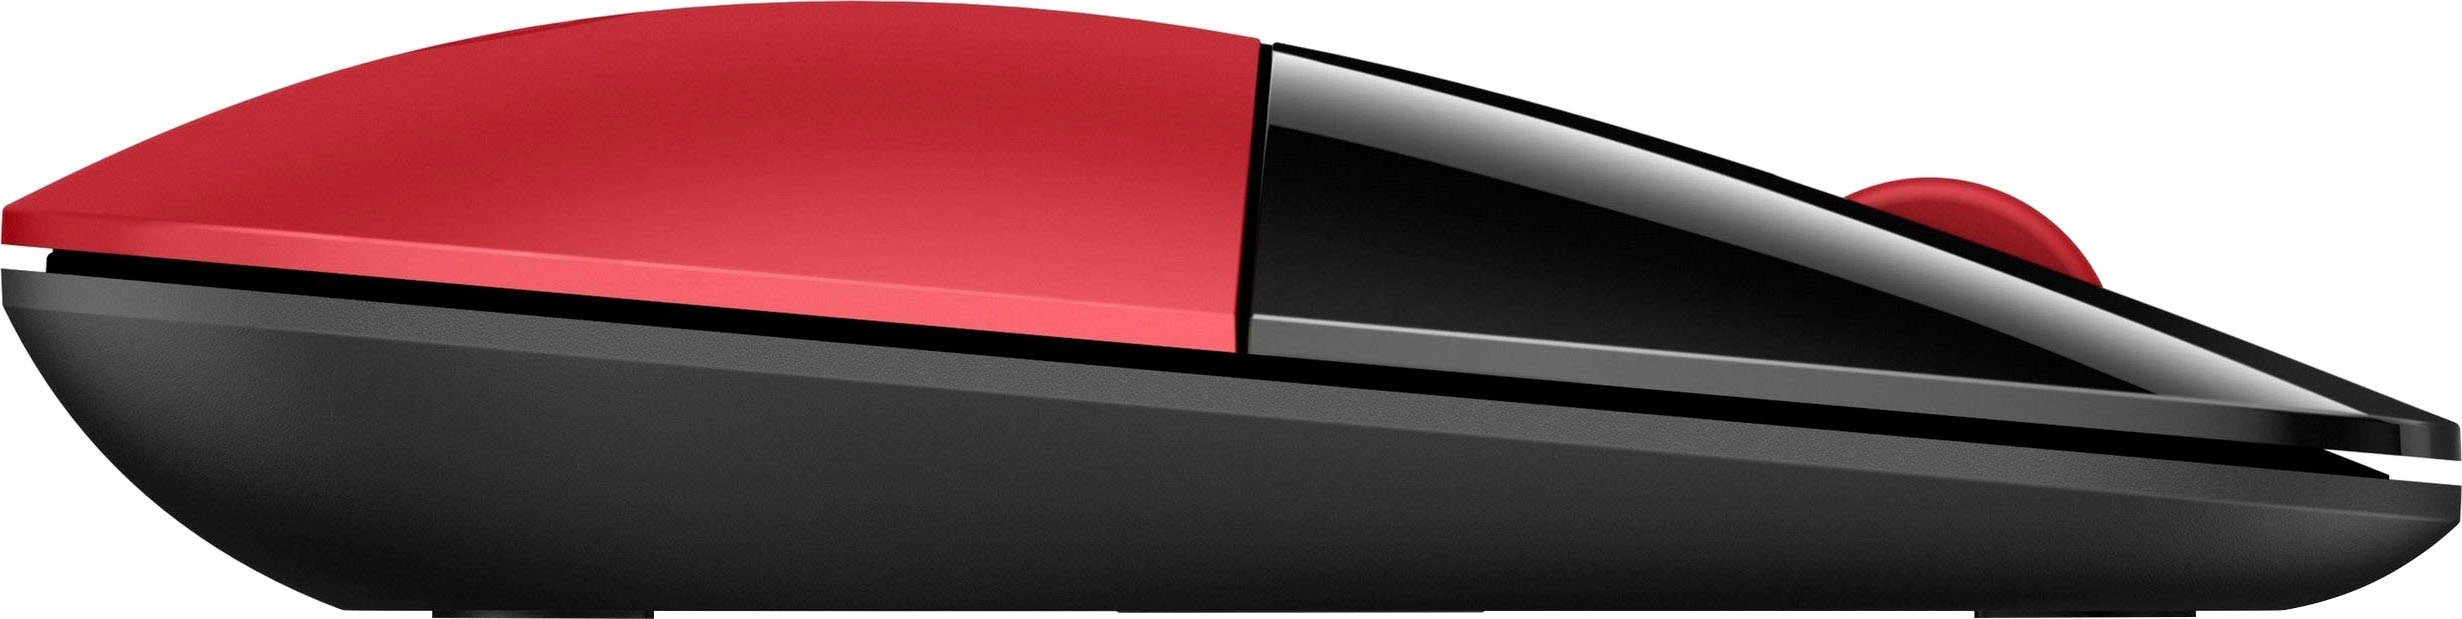 HP Z3700 schwarz/rot Maus